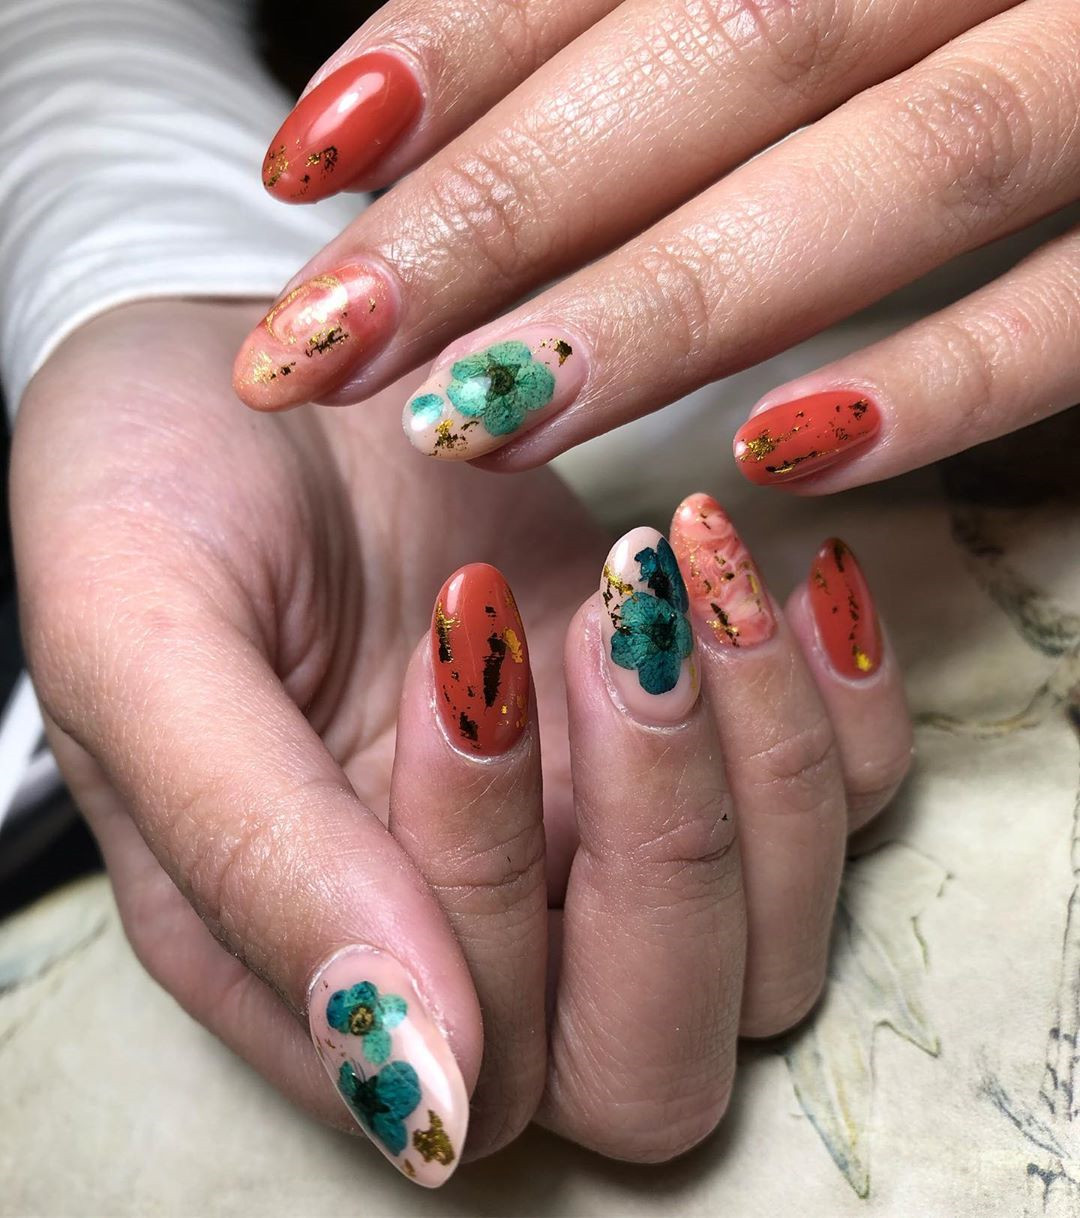 65 Pretty and Delicate Floral Nail Designs 2019  #nails #nailsdesign #nailsart #FloralNail #FlowerNail